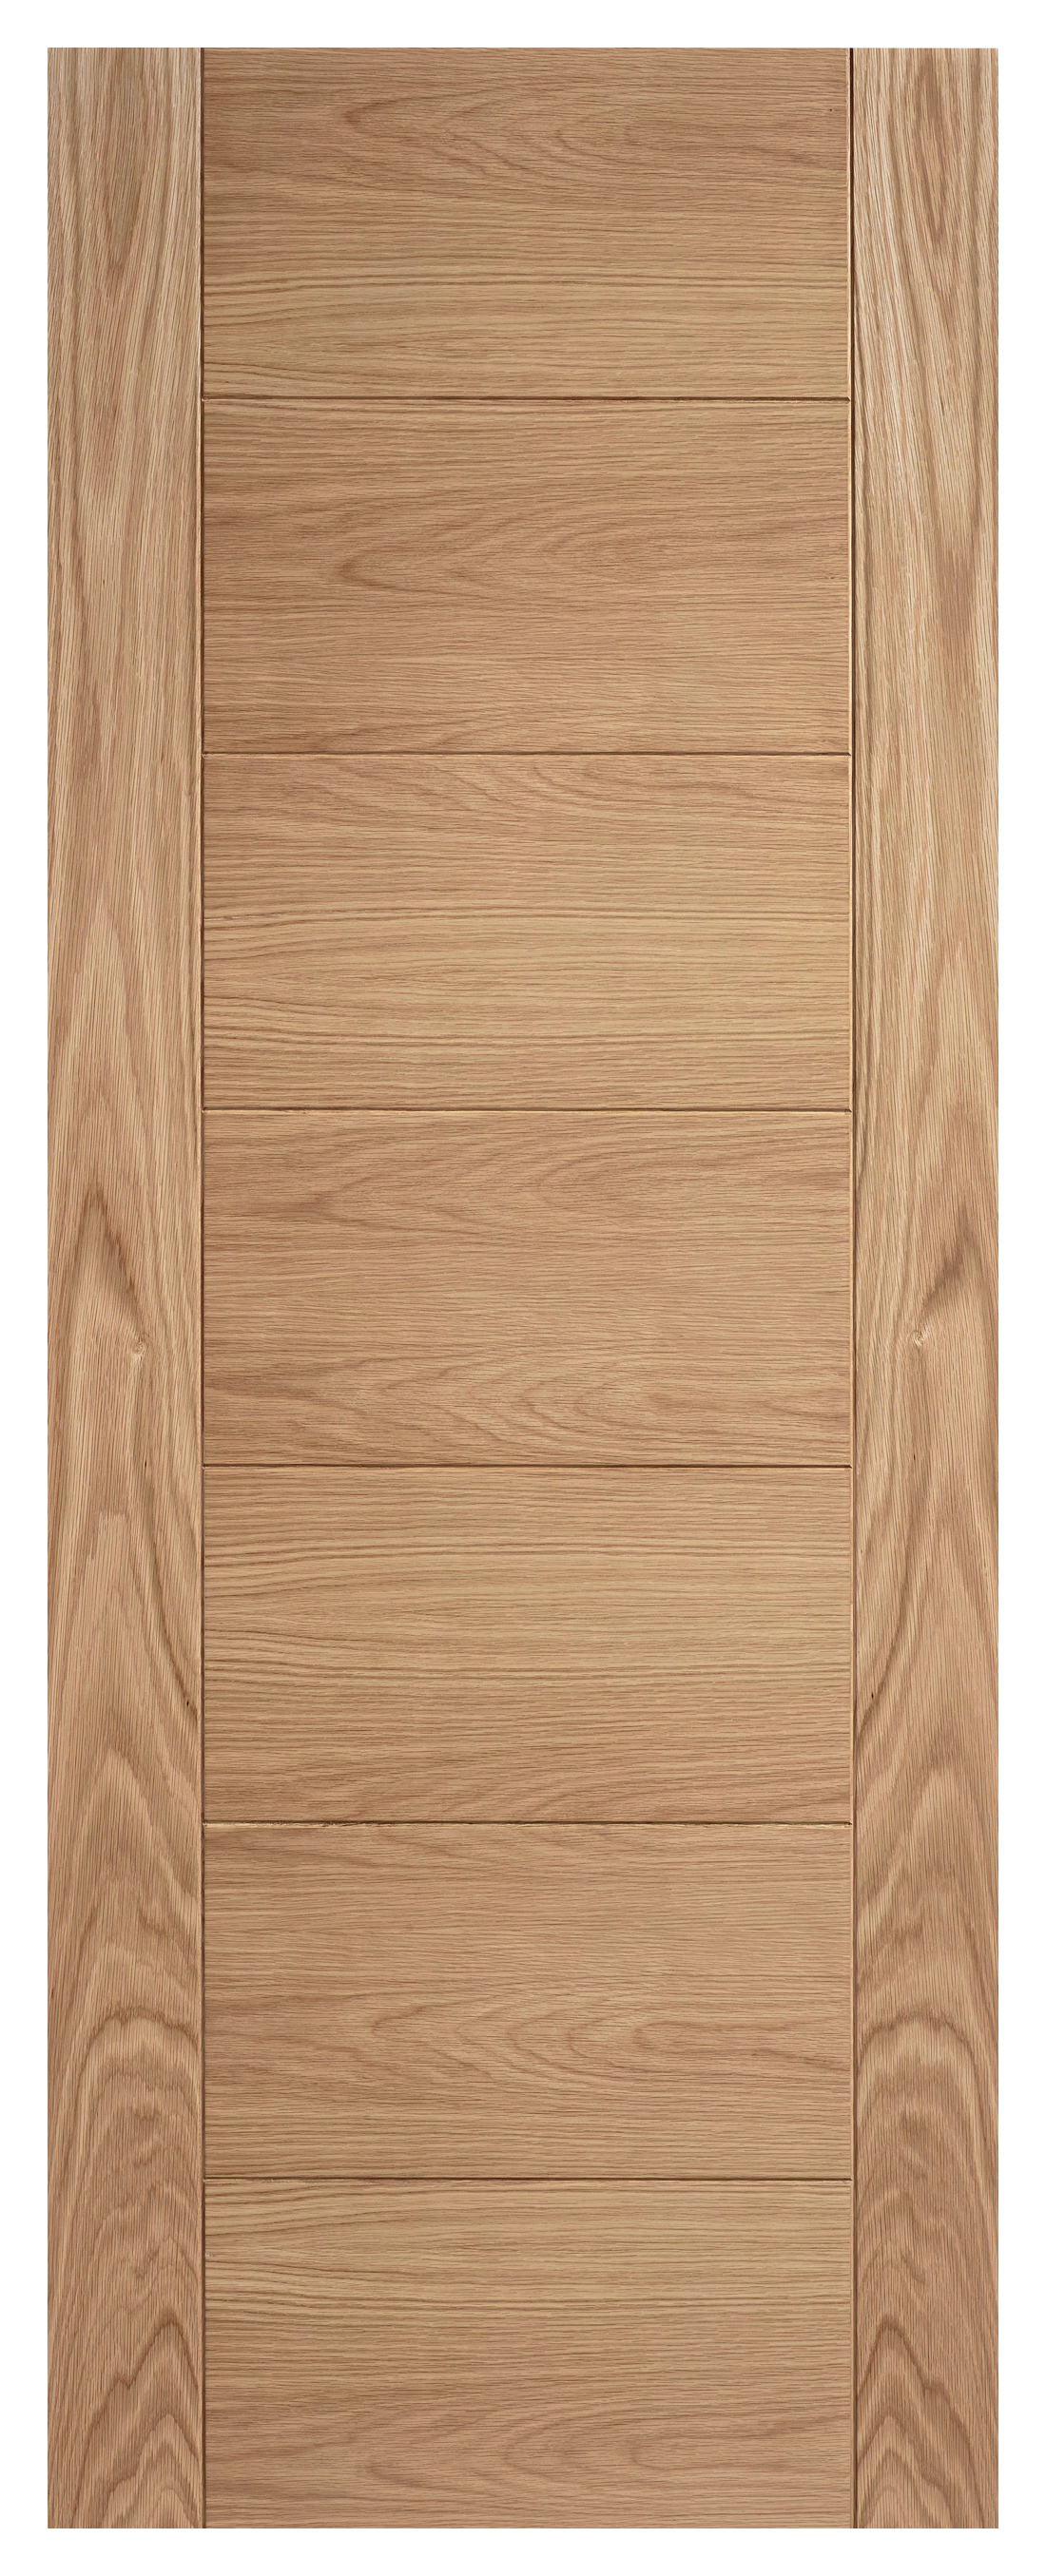 LPD Internal Carini 7 Panel Pre-Finished Oak Door - 2040mm